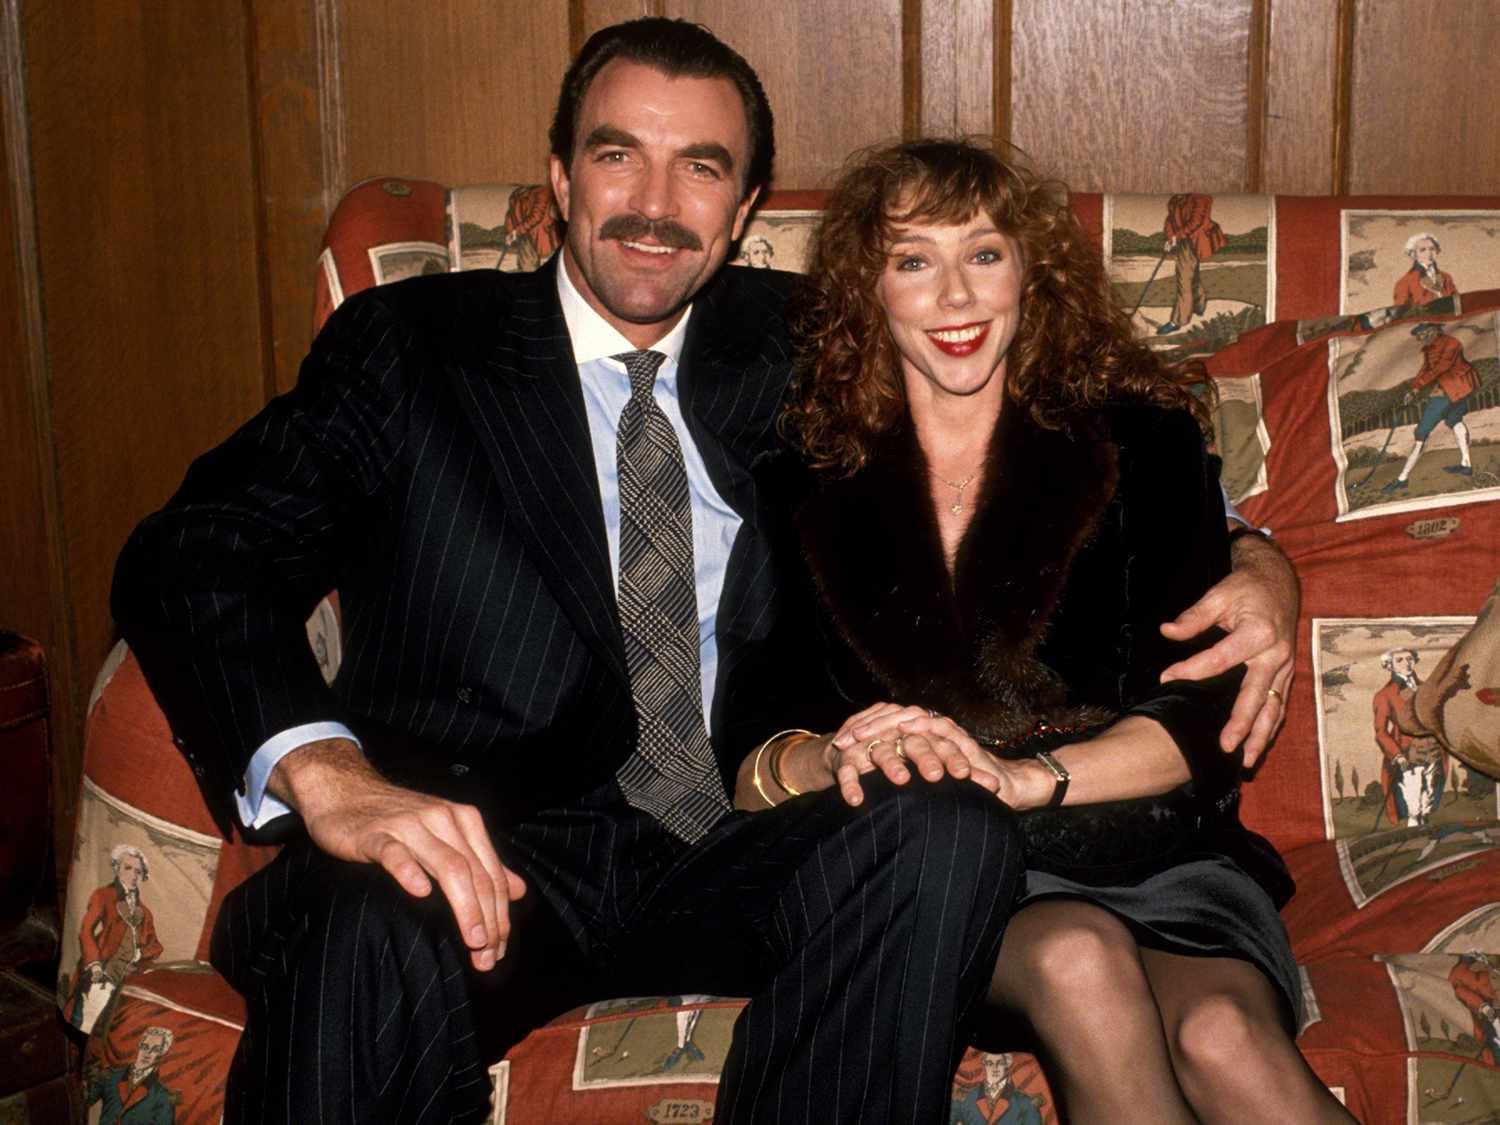 Tom Selleck and wife Jillie Mack circa 1989 in New York City